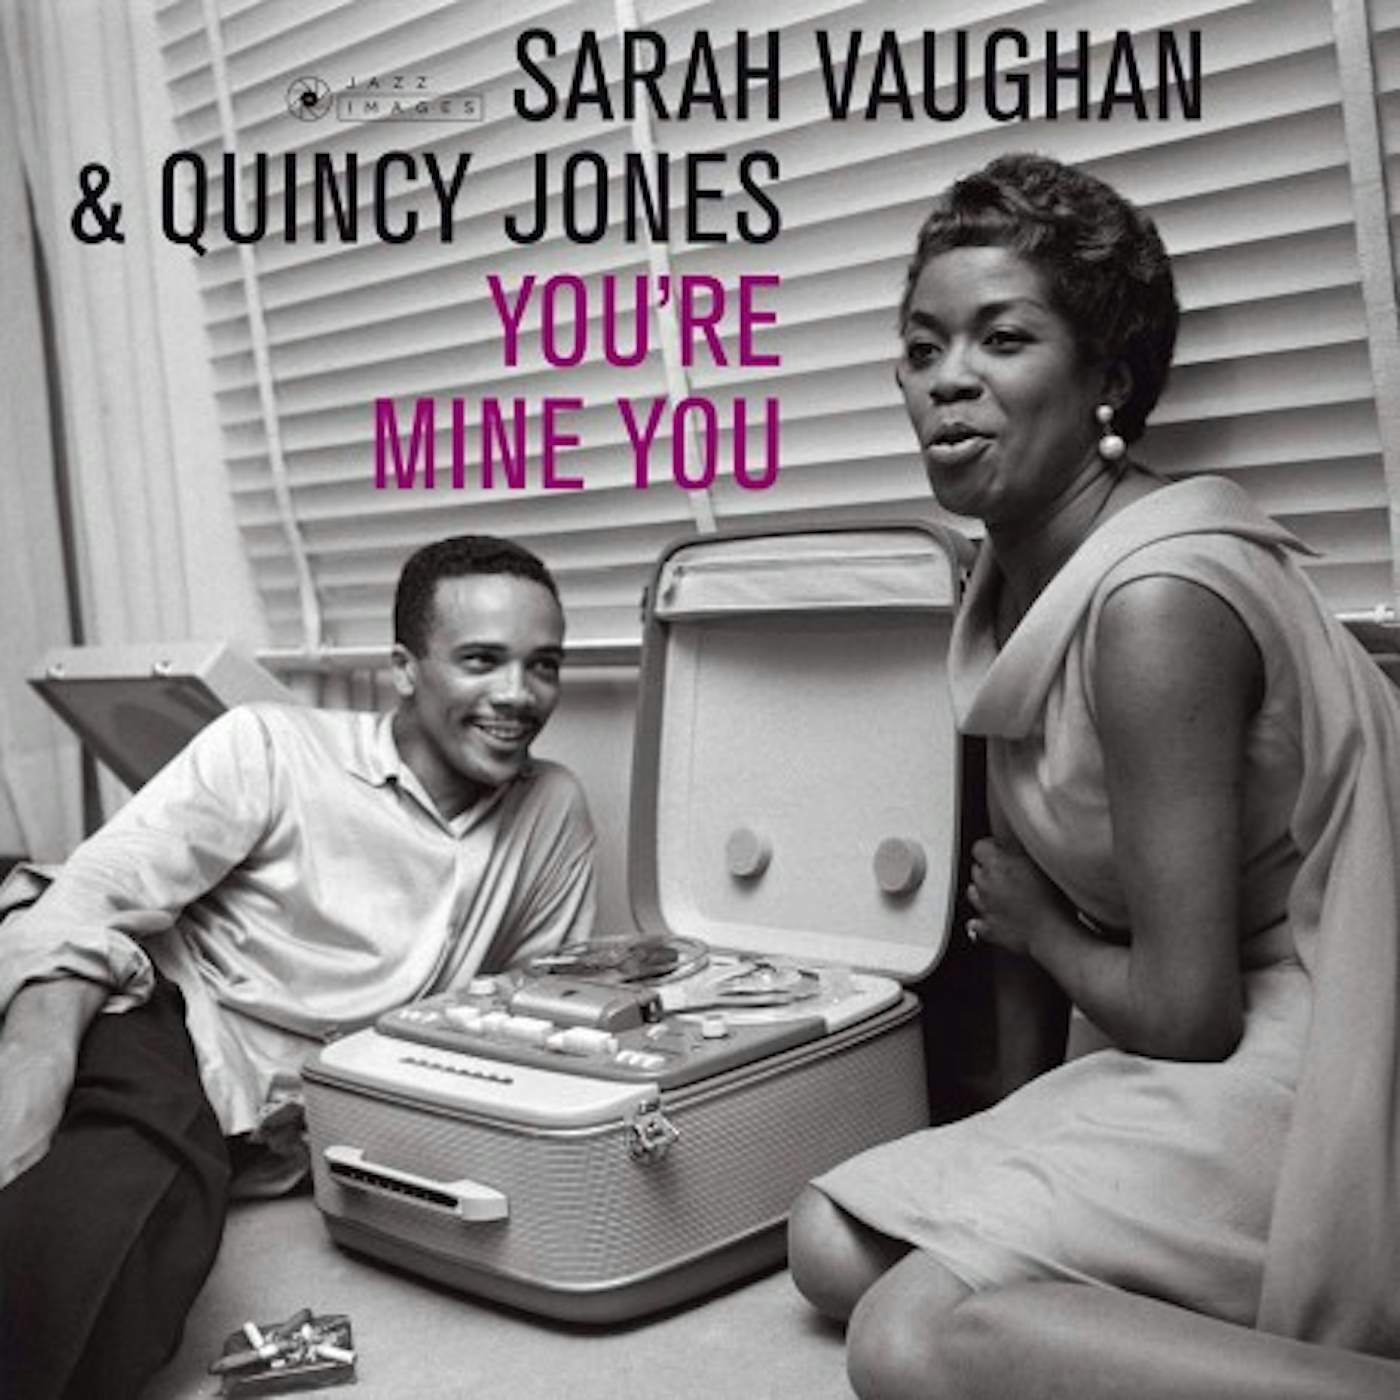 Sarah Vaughan You're Mine You Vinyl Record